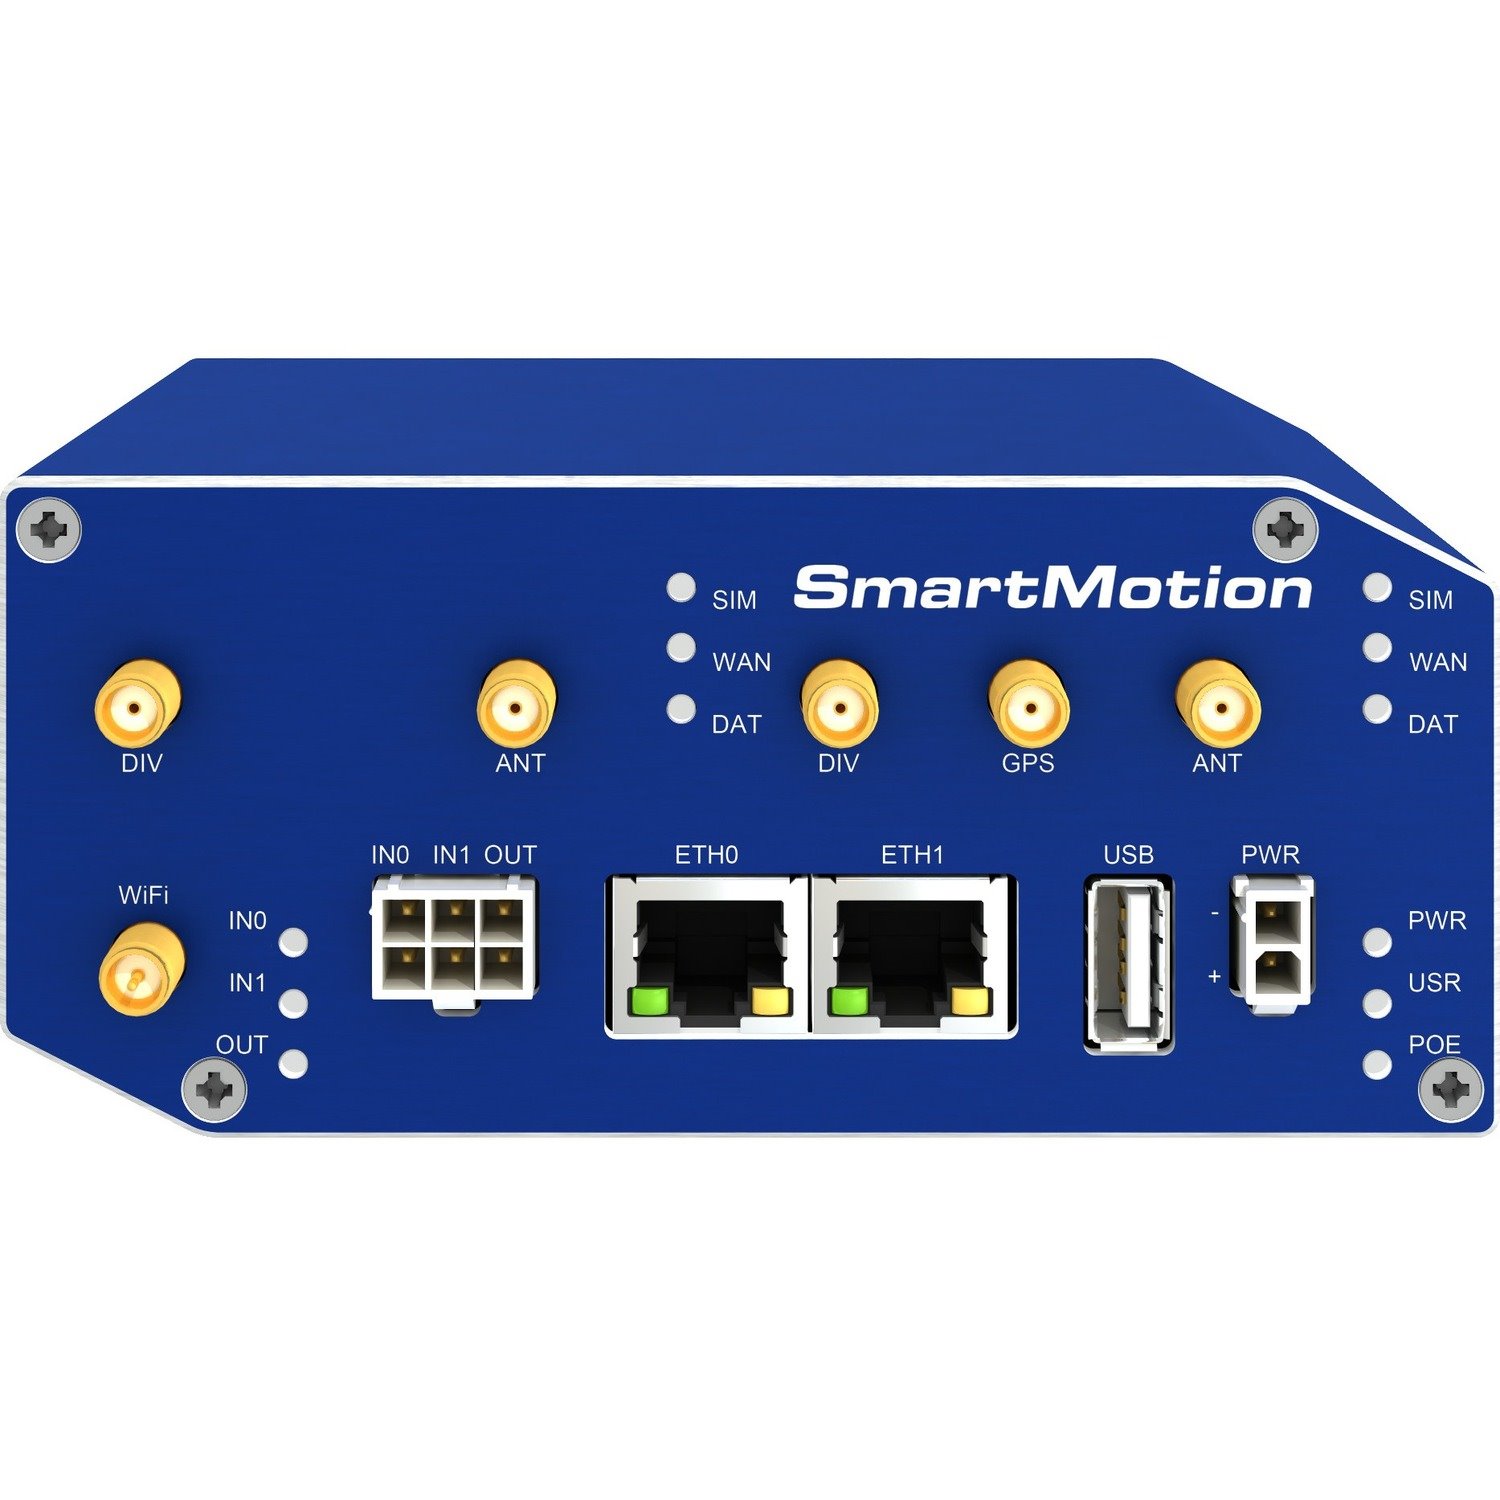 B+B SmartWorx SmartFlex SR305 2 SIM Cellular Modem/Wireless Router